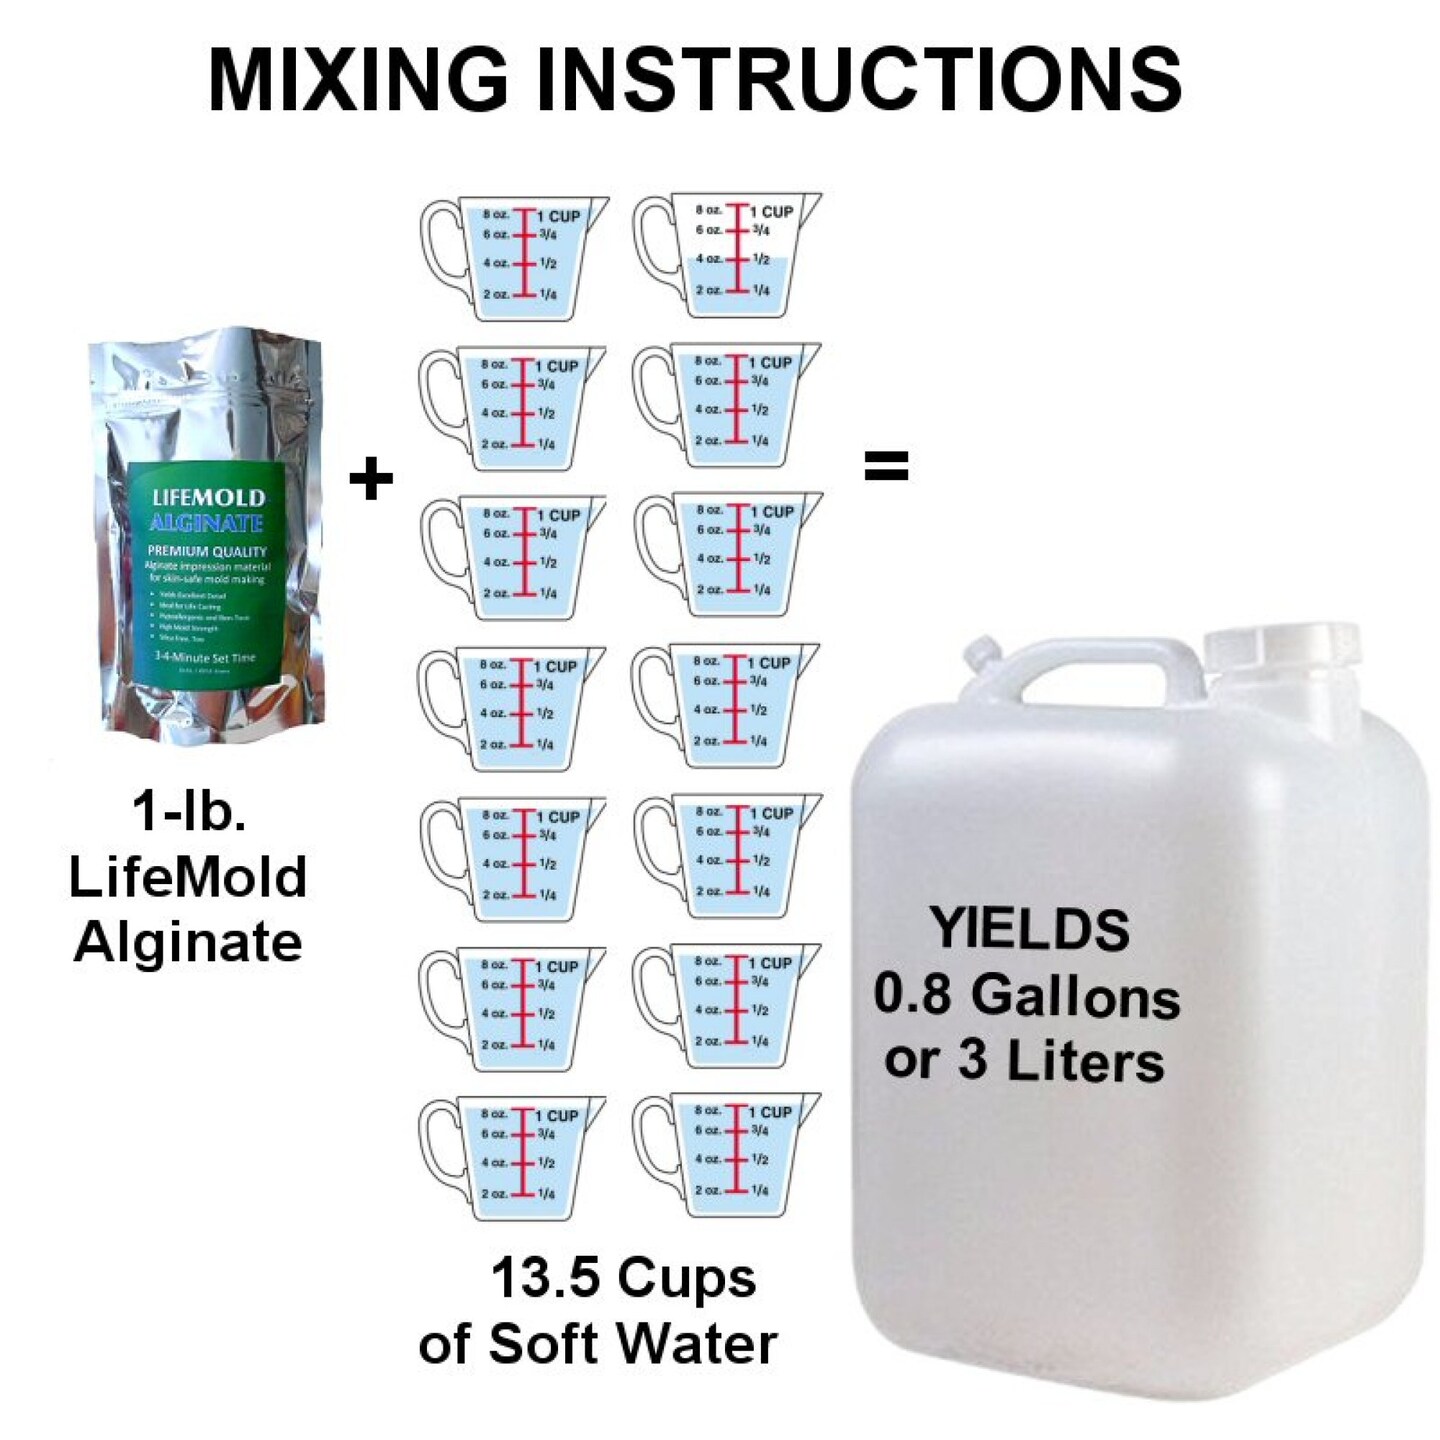 Alginate Molding Powder Refill for Hand Casting Kit - Non-Toxic